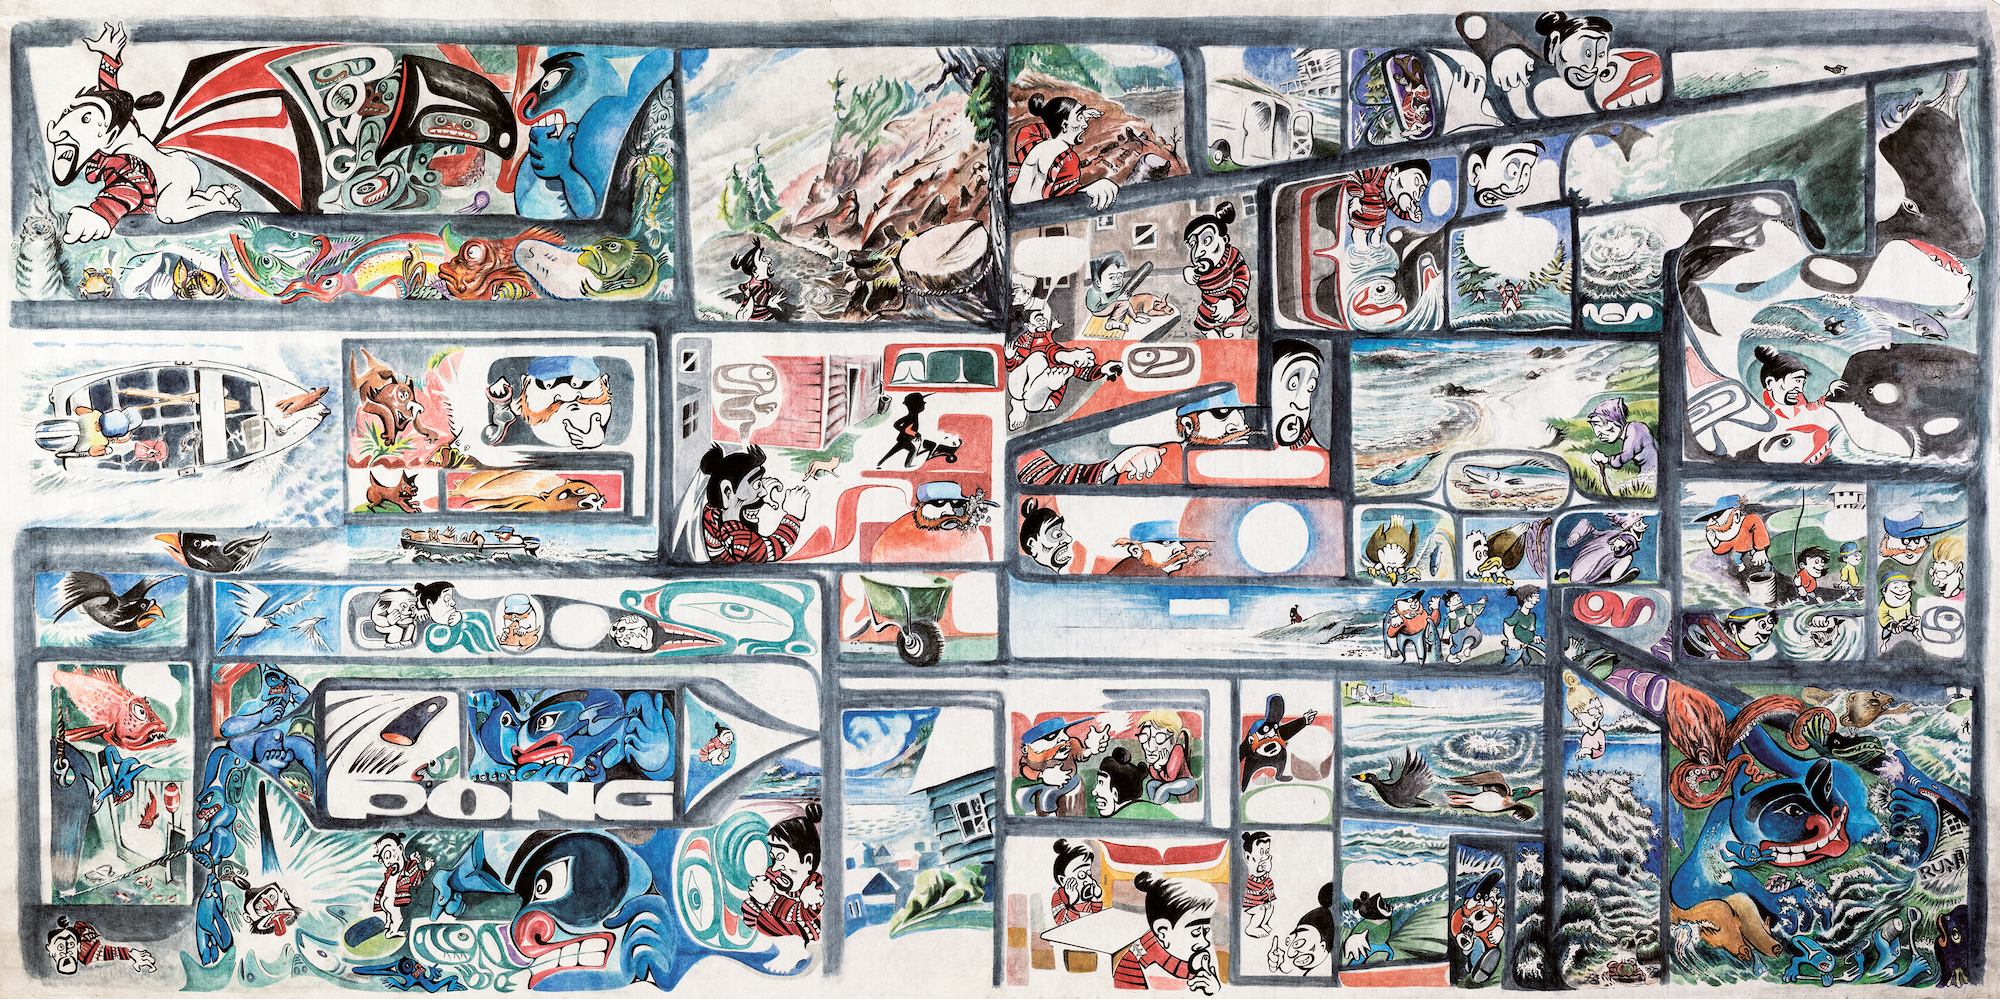 a colorful panel from the Haida Manga mural